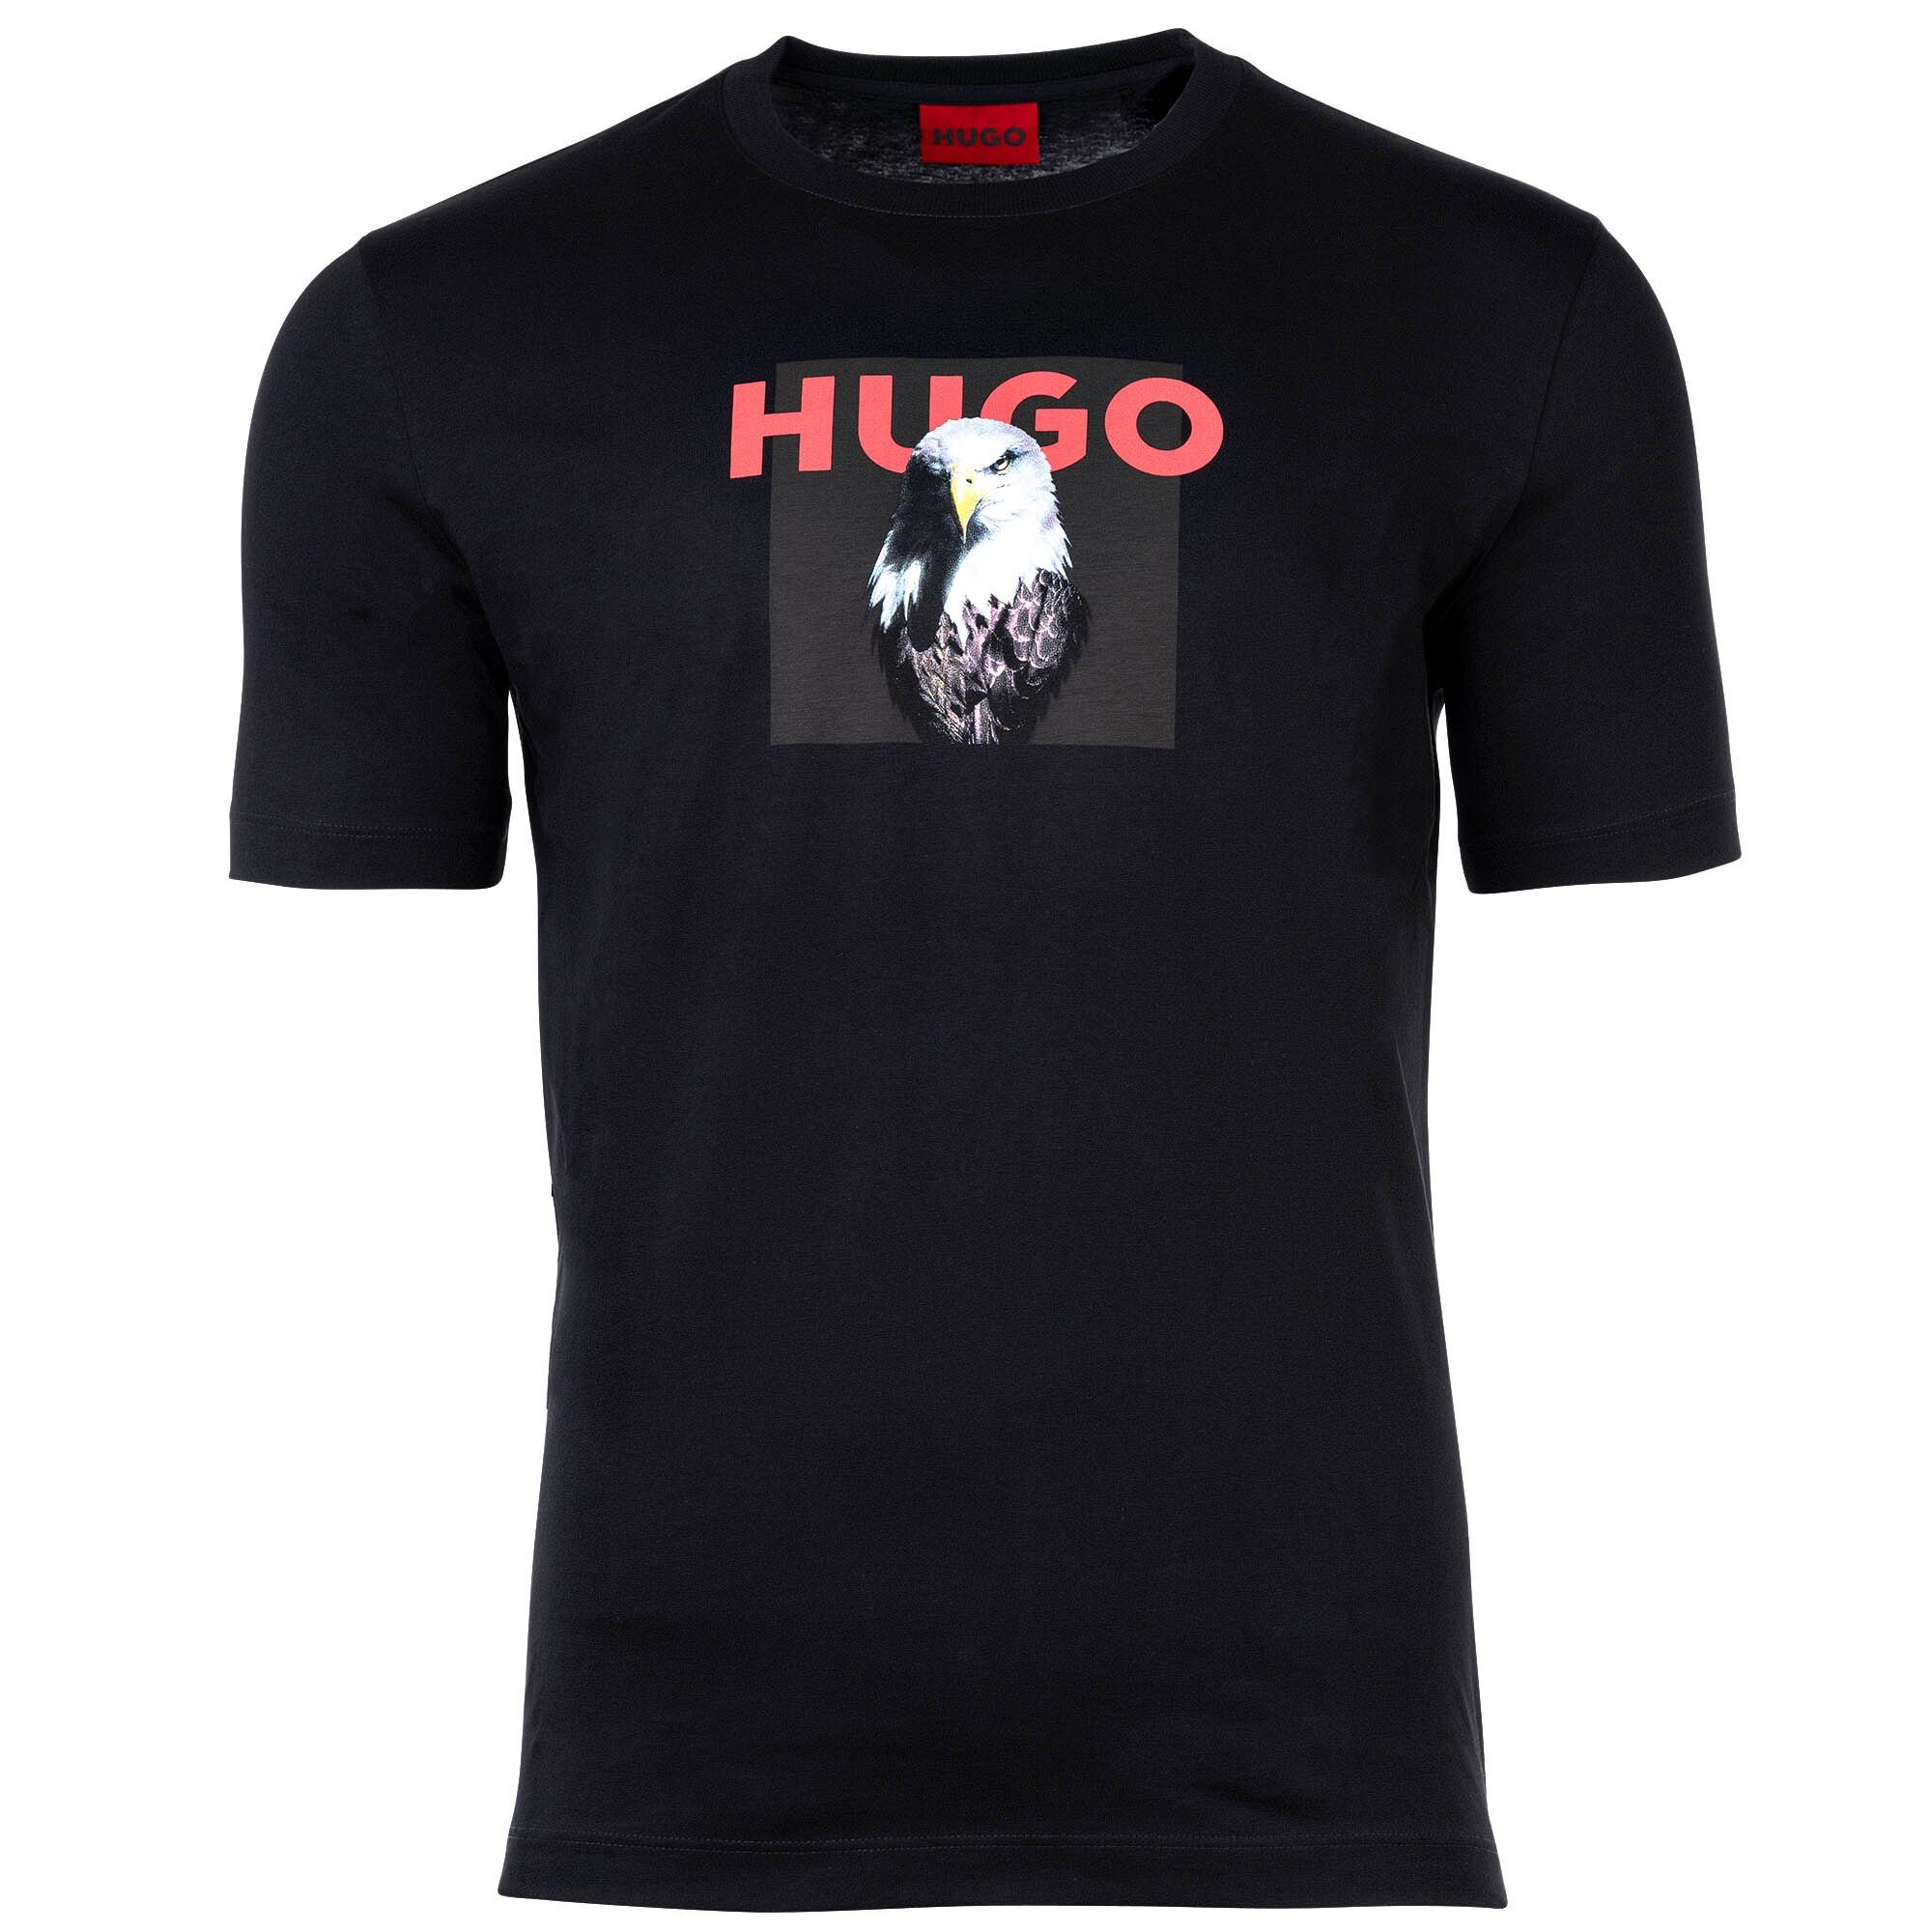 Herren Shirts HUGO T-Shirt Herren T-Shirt - Dhynx, Katzenprint, Rundhals,